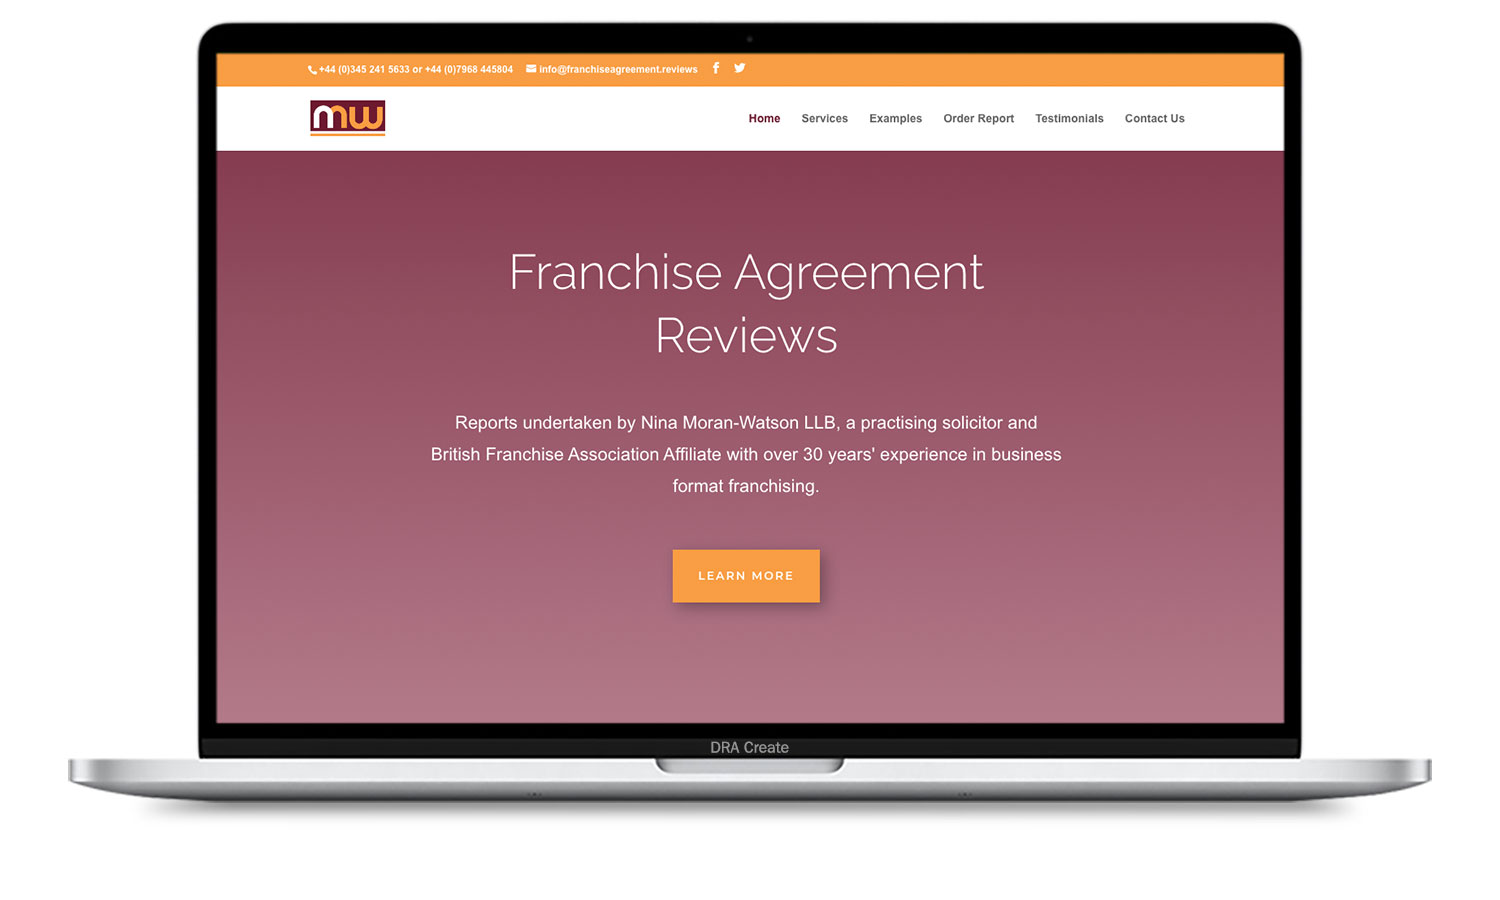 Franchise Agreement Reviews website design